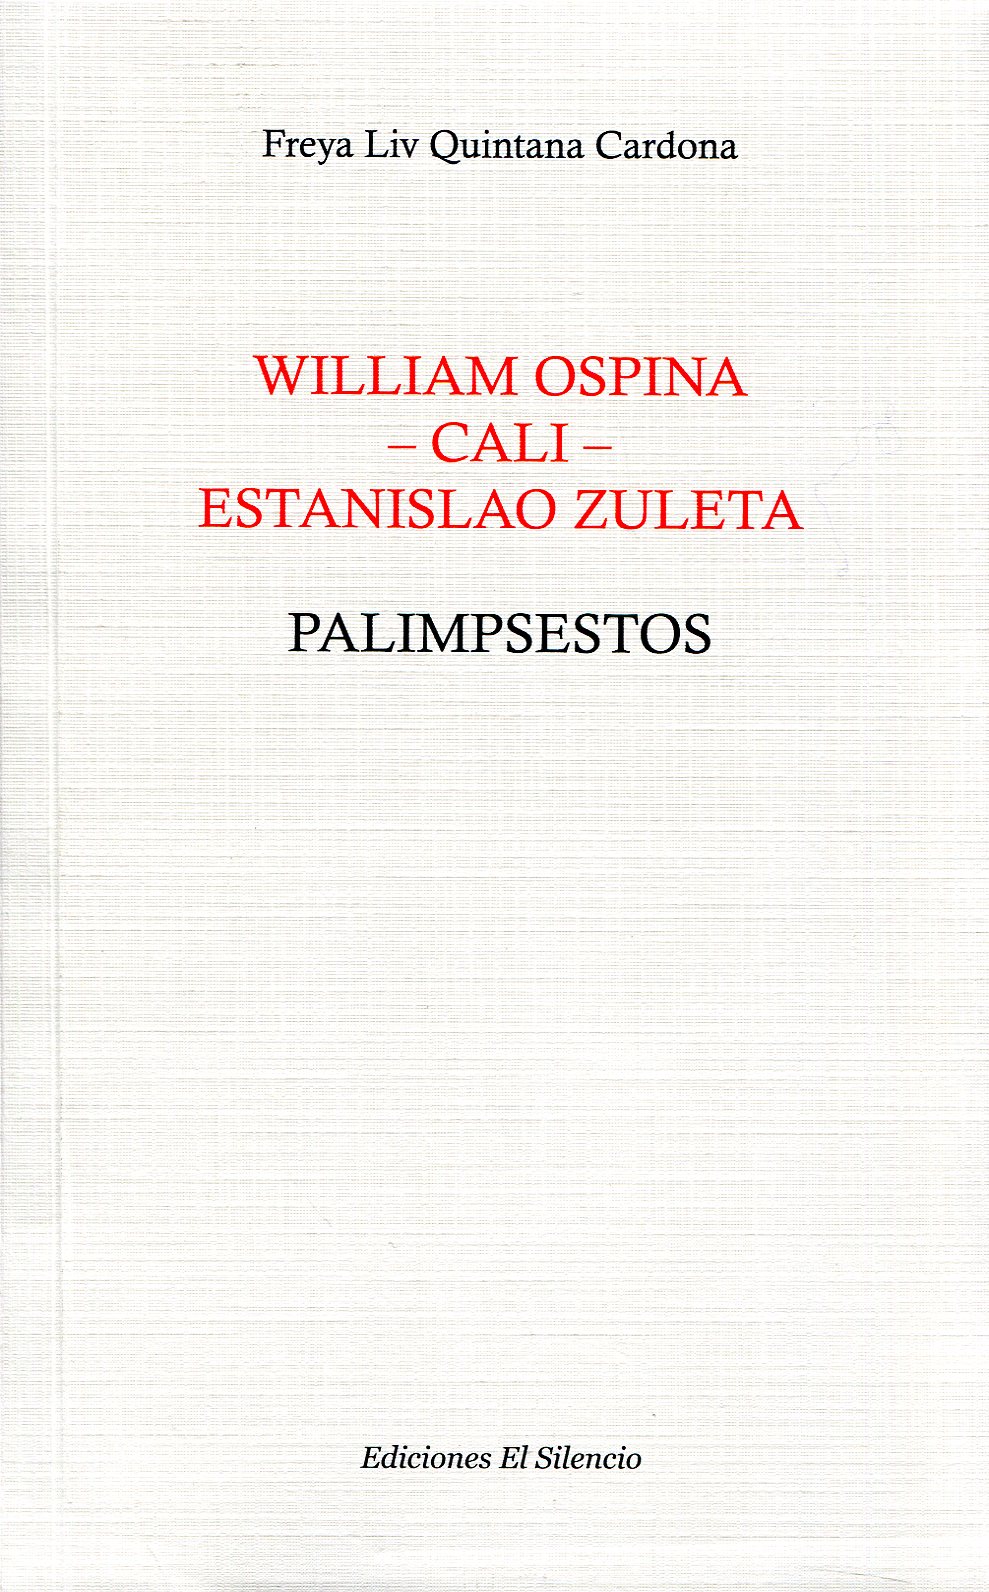 William Ospina -Cali- Estanislao Zuleta